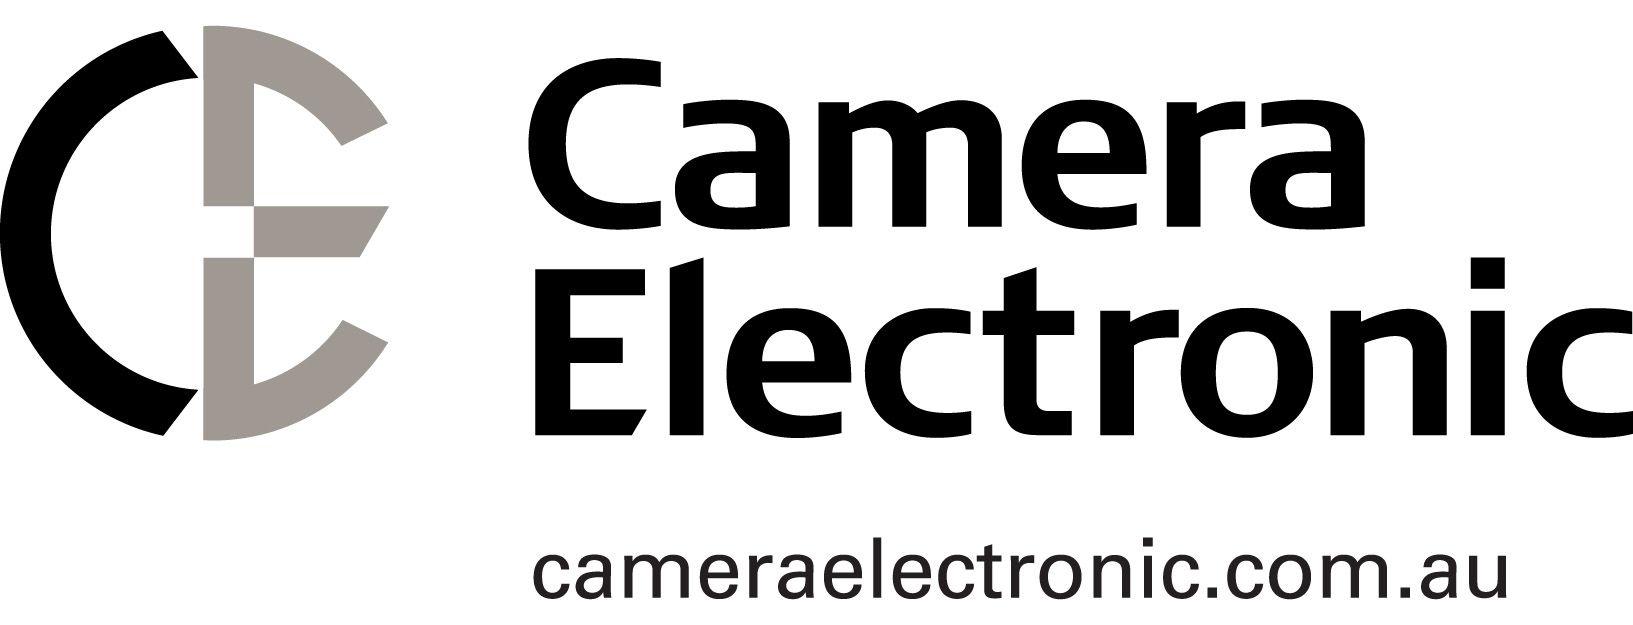 Electronic Logo - Camera Electronic - Logos